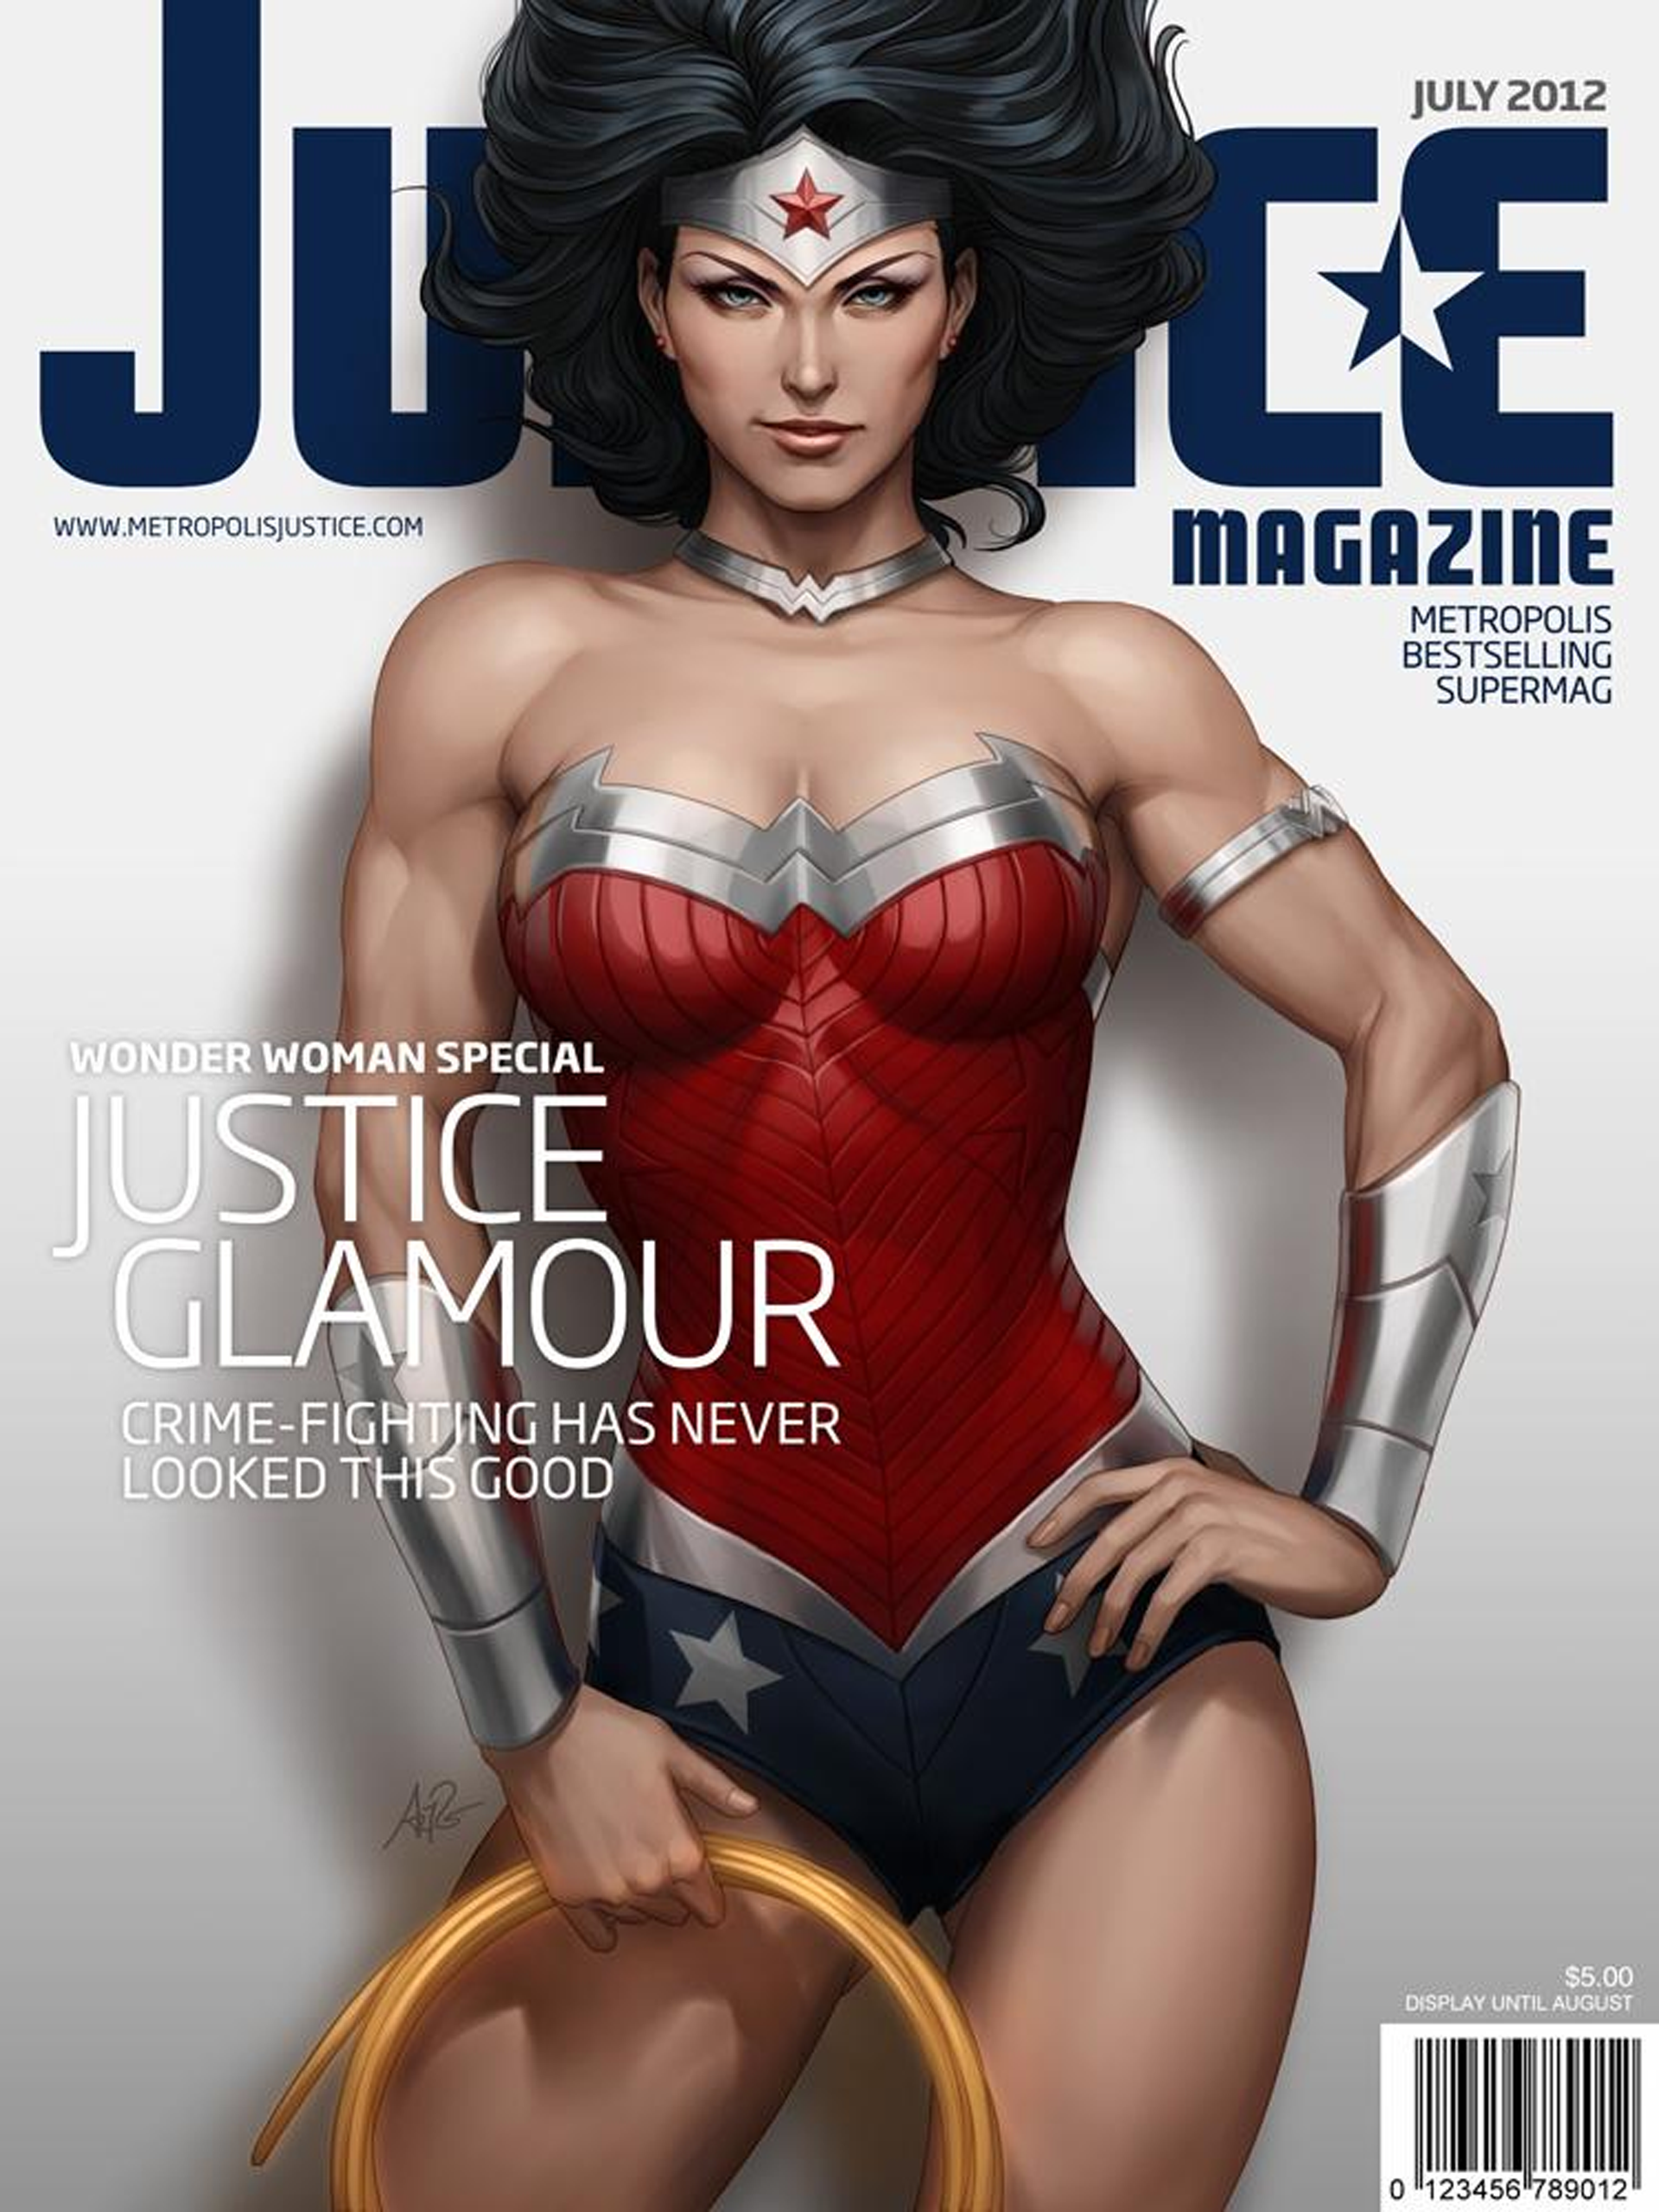 General 1920x2560 superhero Wonder Woman magazine cover DC Comics comics